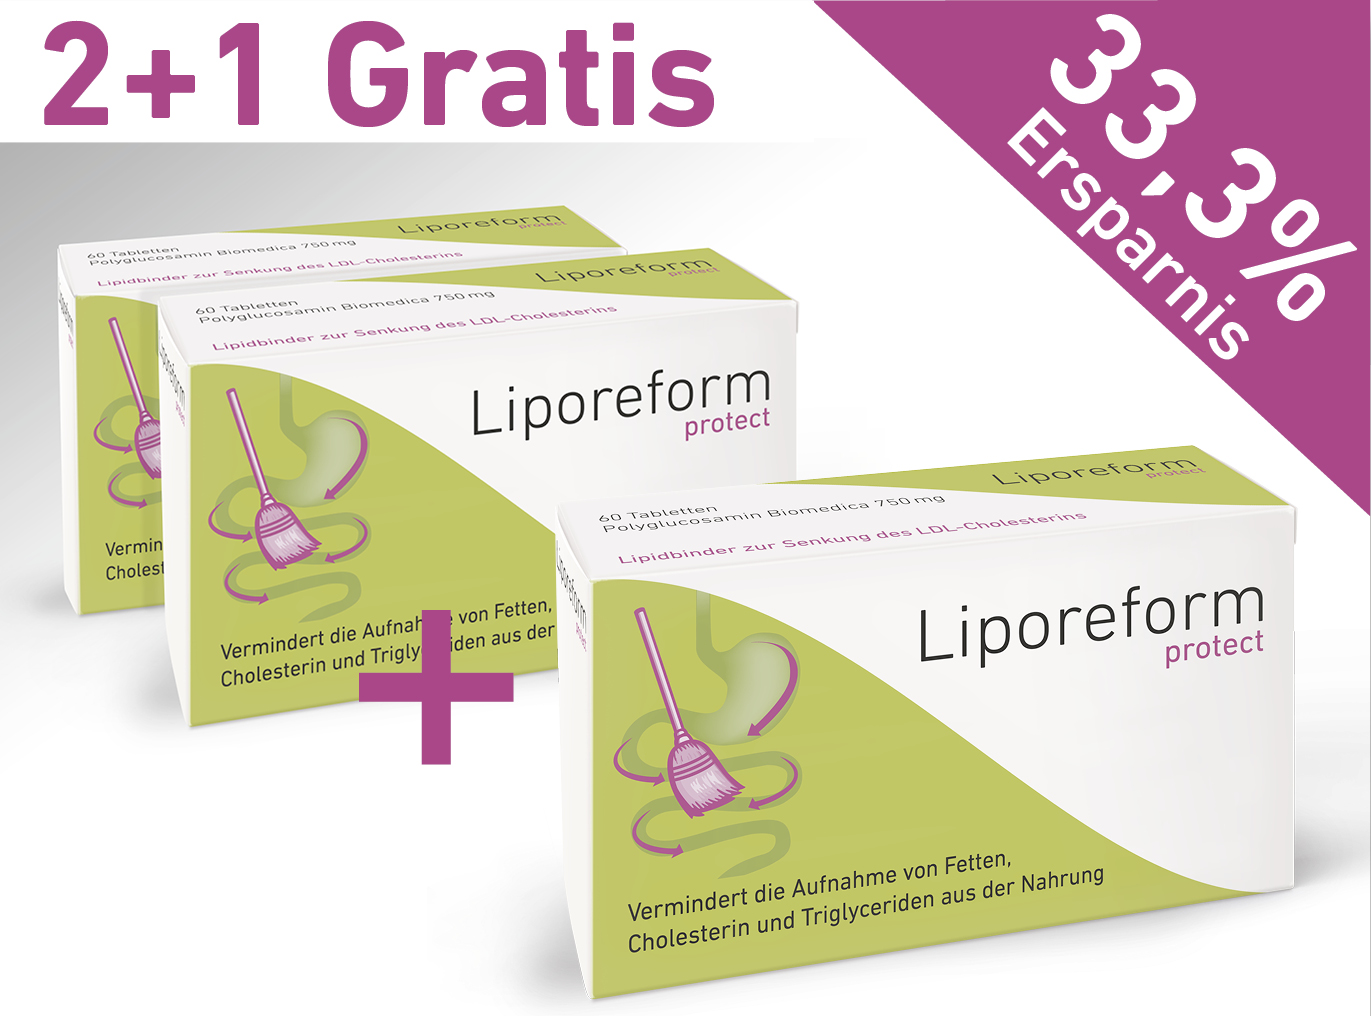 Liporeform protect 2 plus 1 - Biomedica Online-Shop